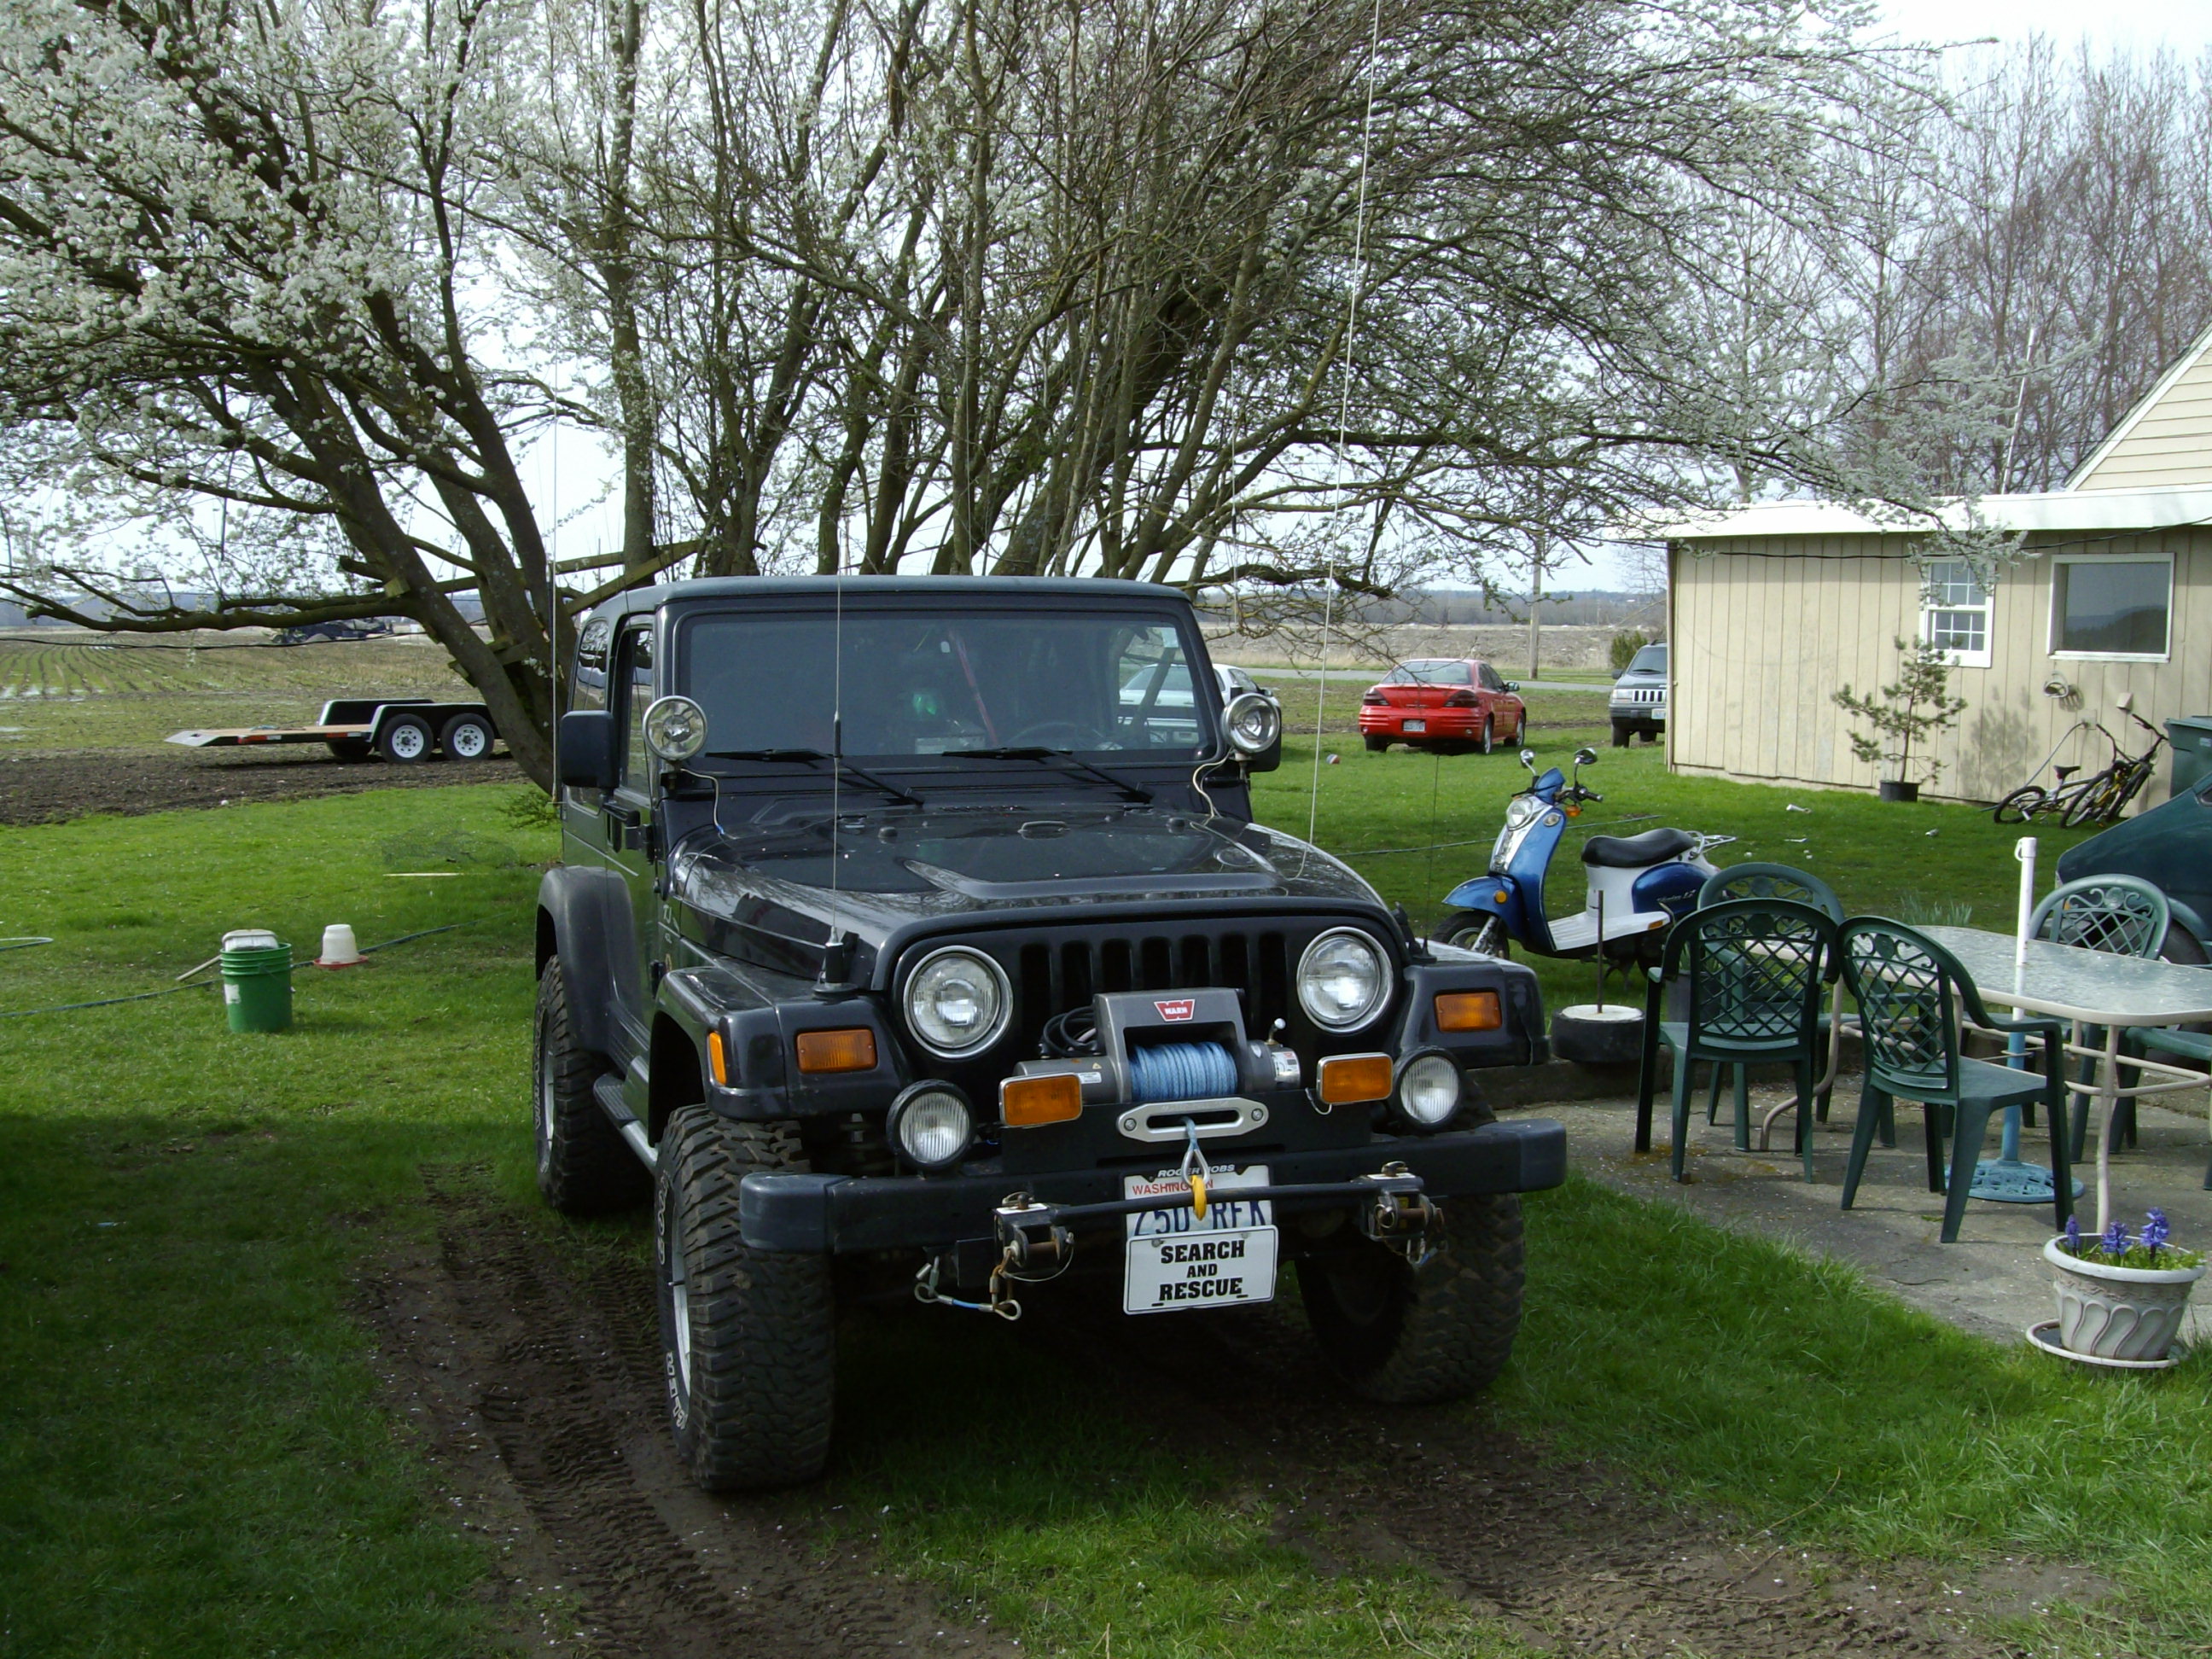 ke7cpk's 99 jeep